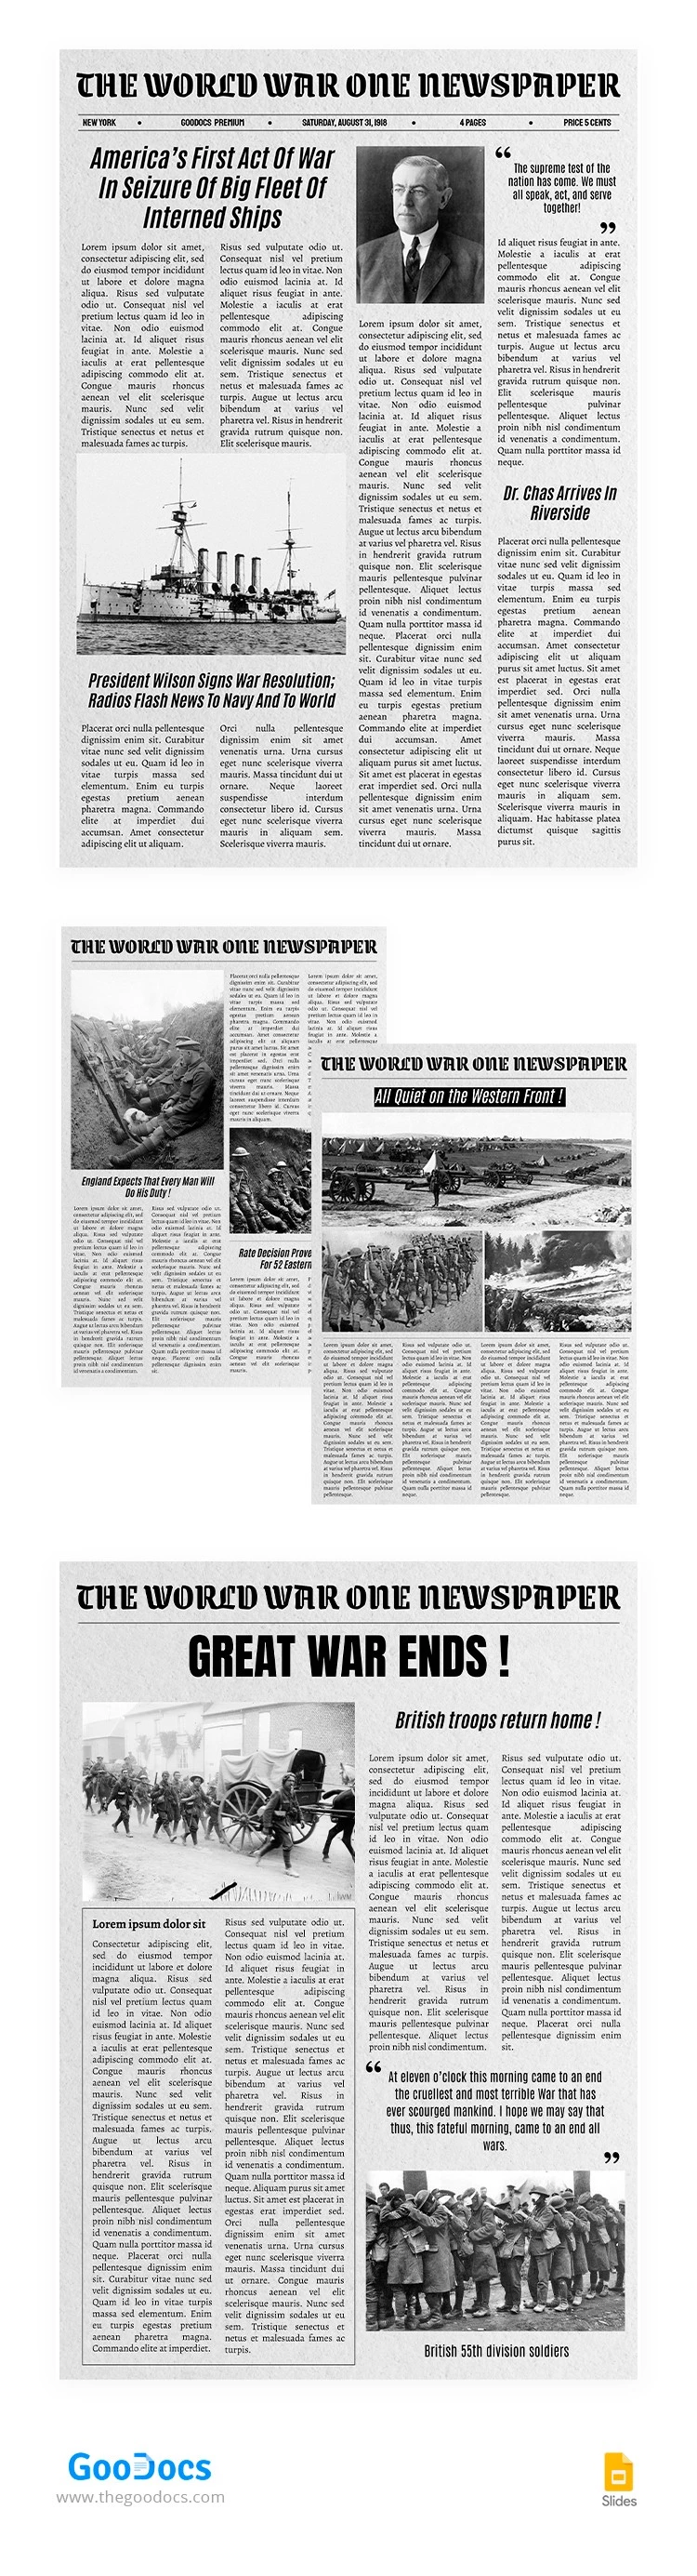 Jornal da Primeira Guerra Mundial - free Google Docs Template - 10066075